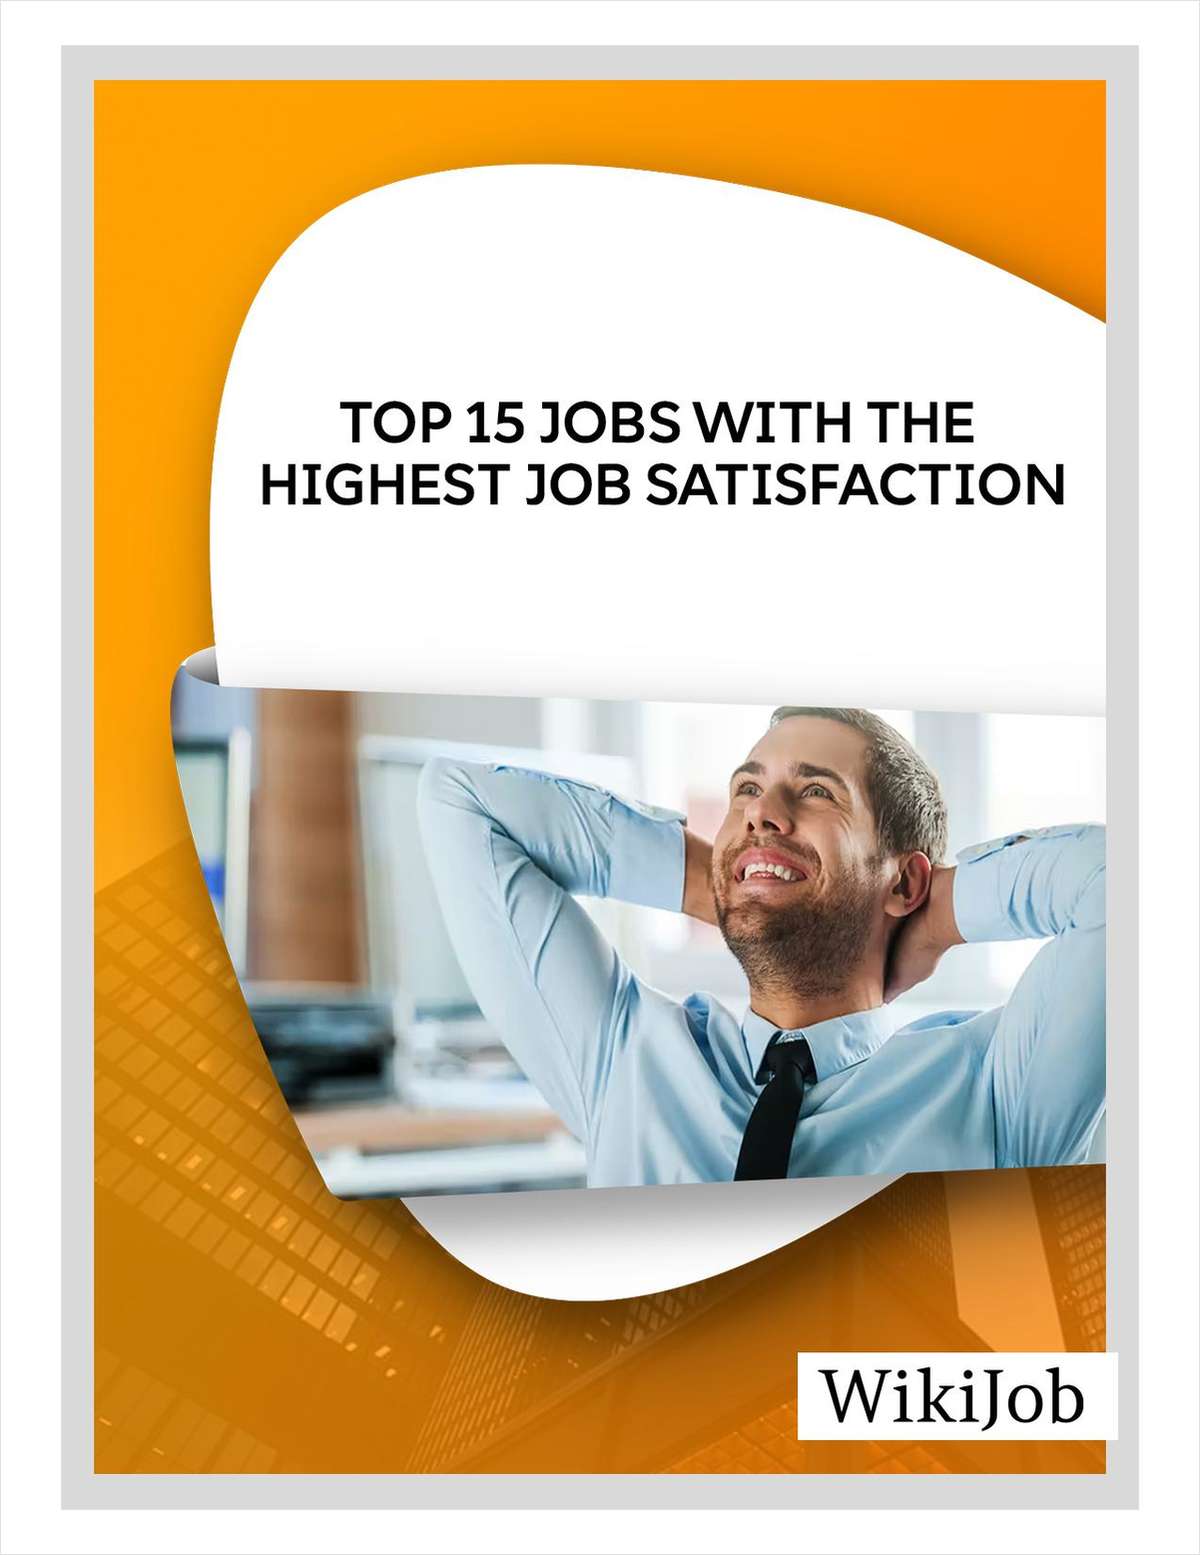 Top 15 Jobs With the Highest Job Satisfaction